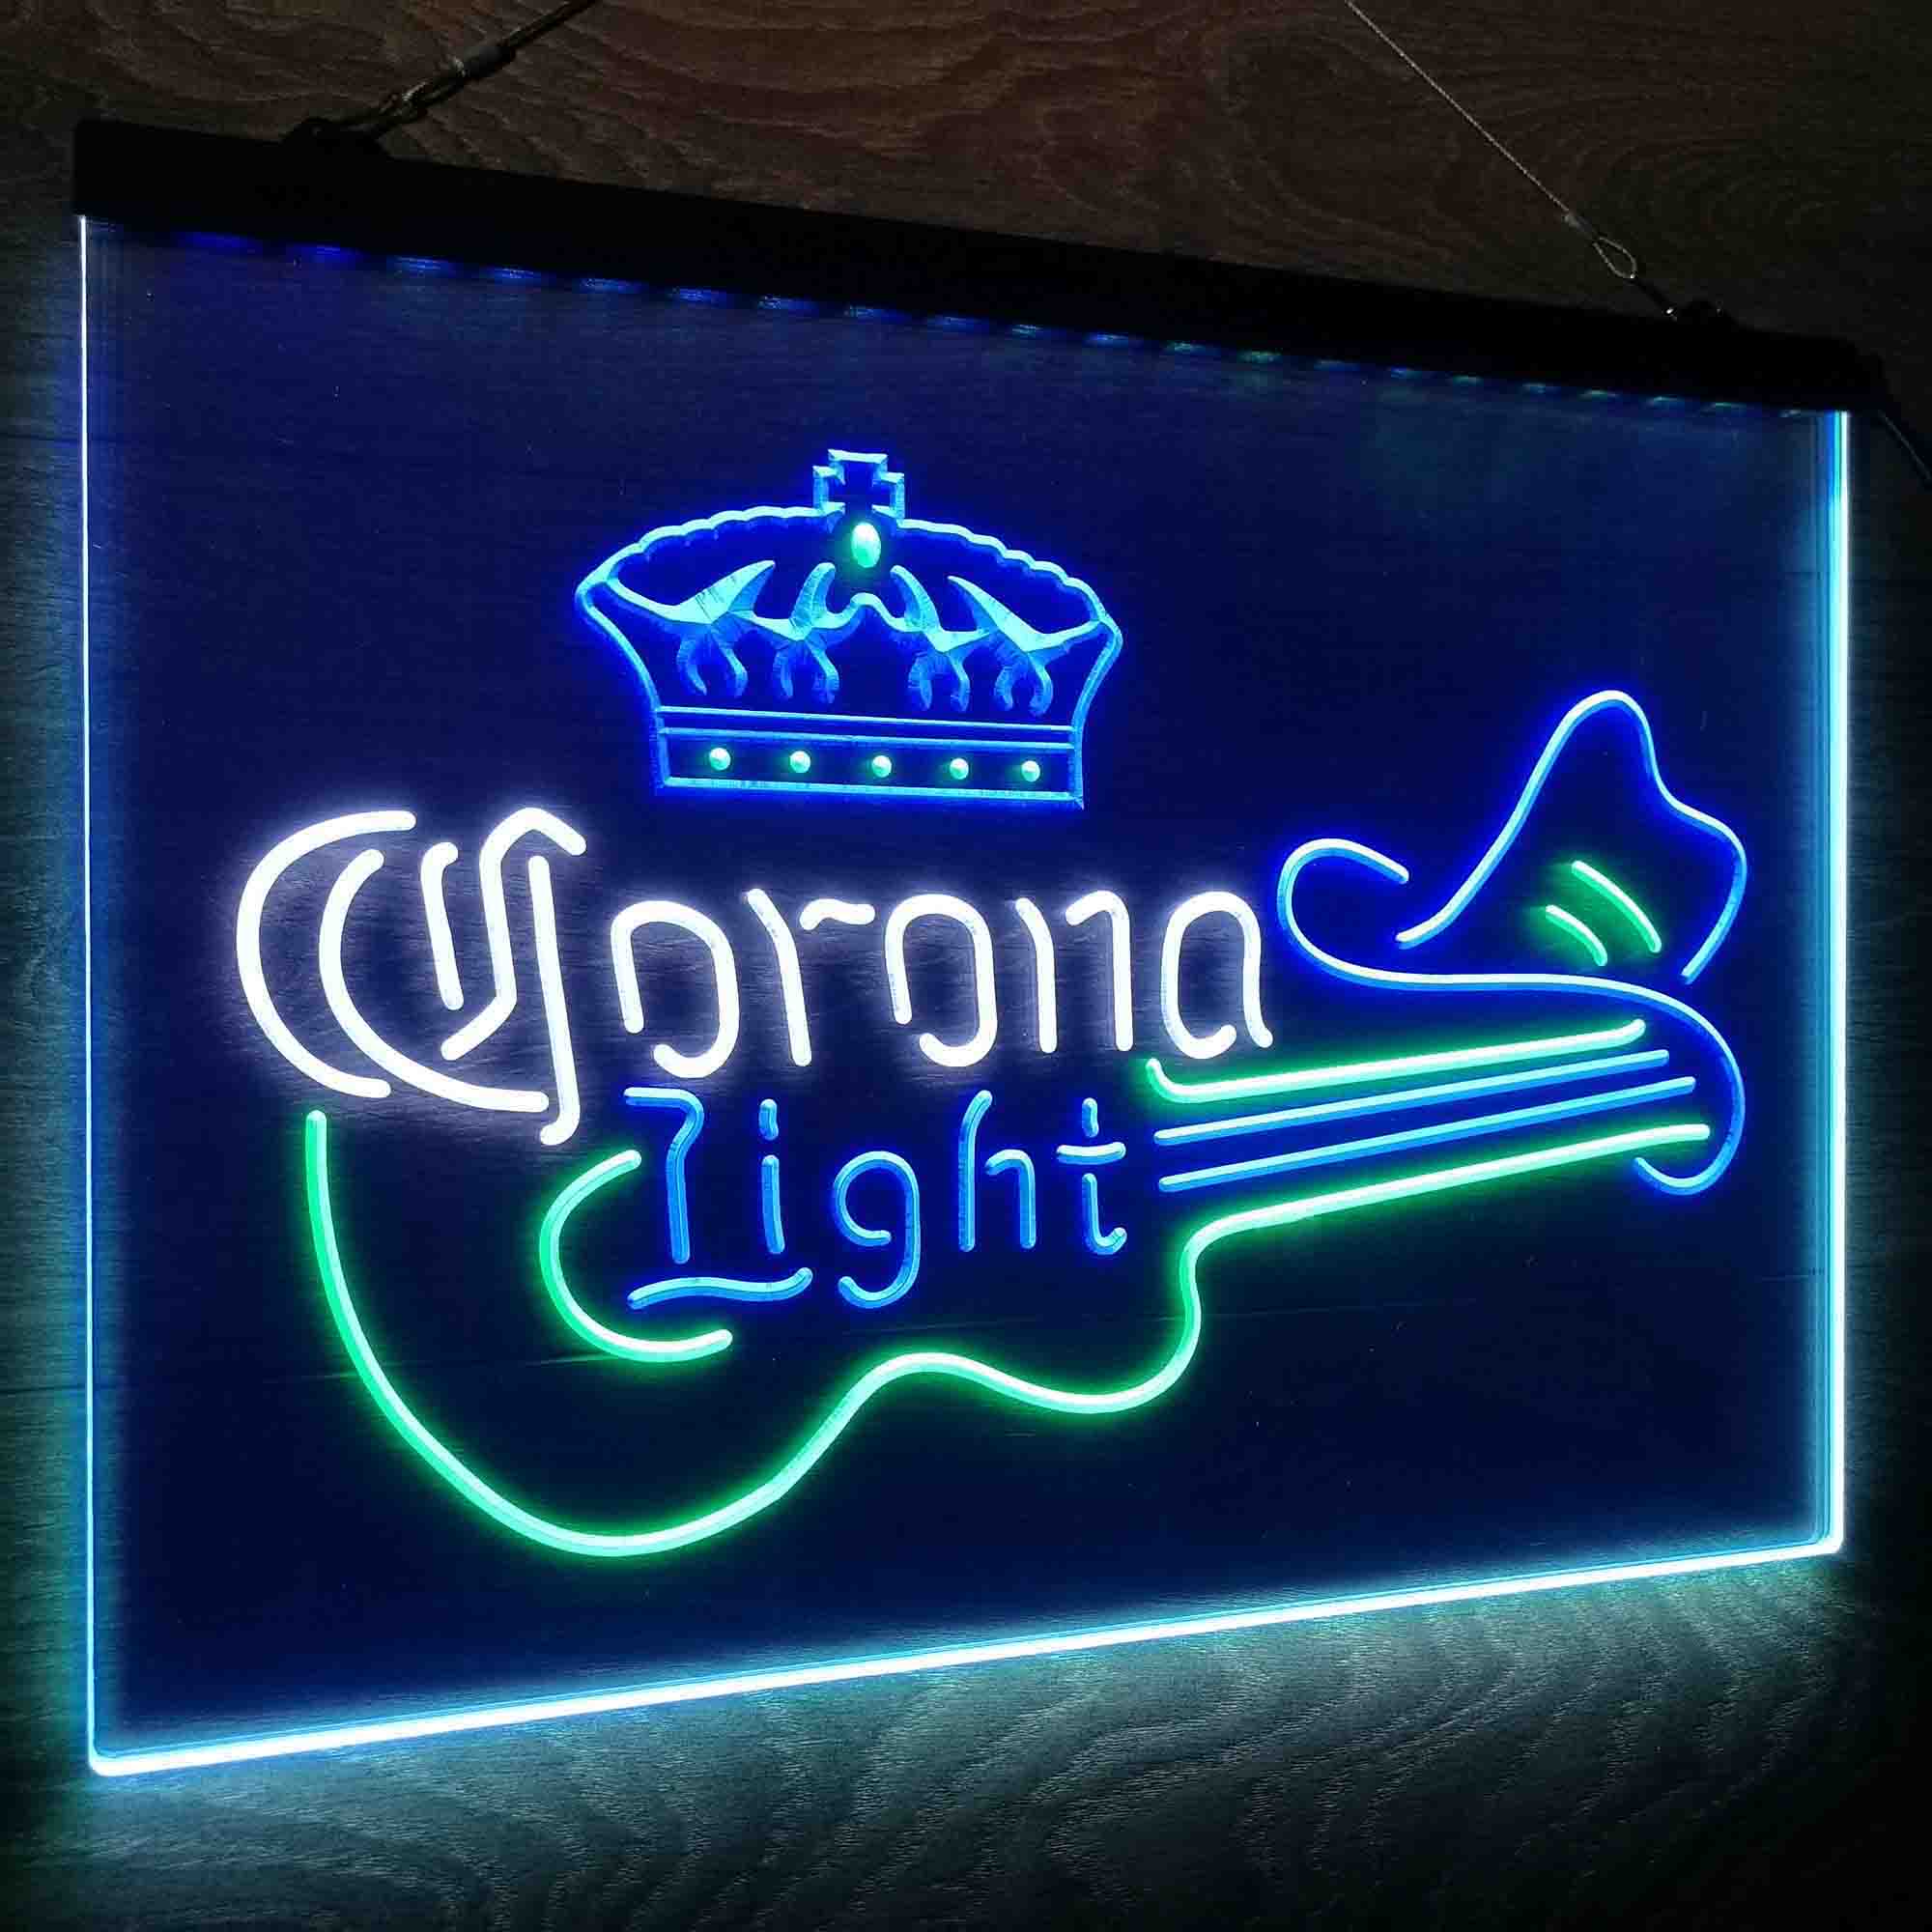 Coronas Light Guitar Cowboy Hat Neon LED Sign 3 Colors